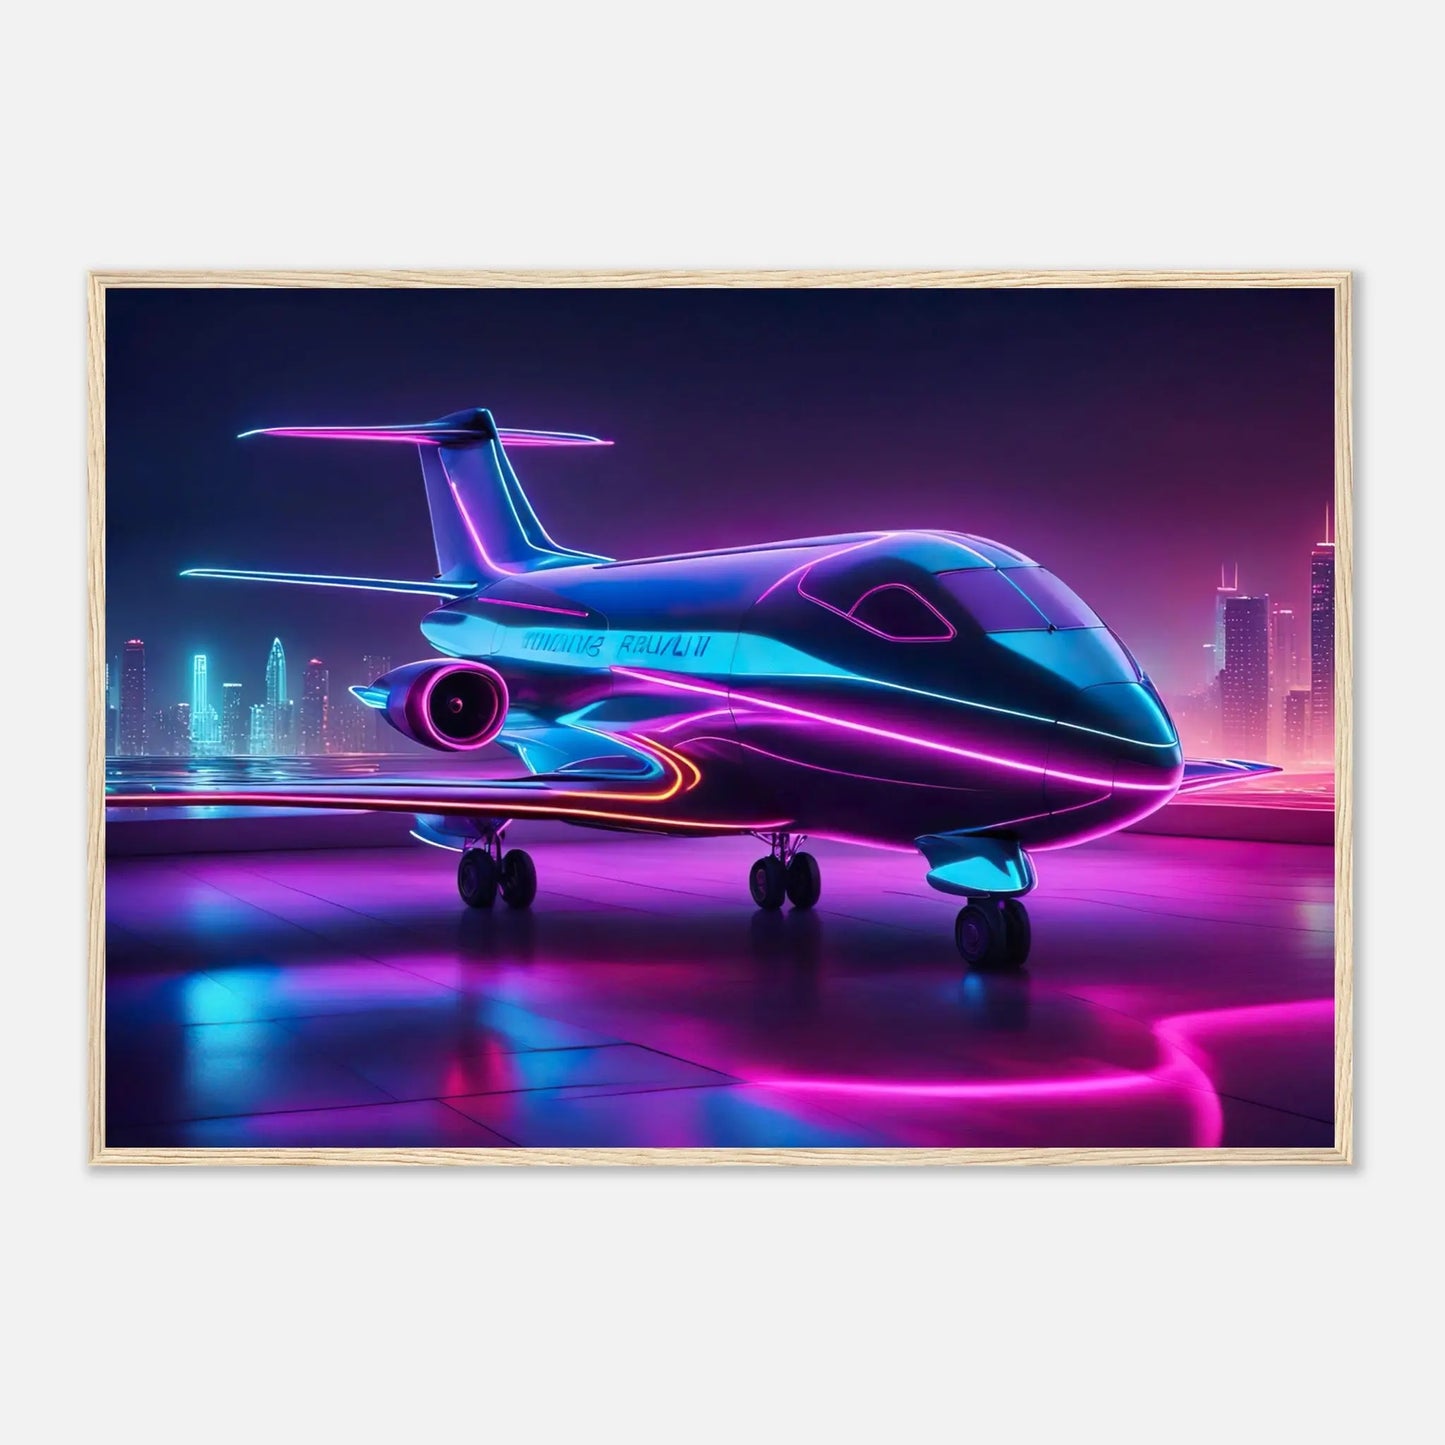 Gerahmtes Premium-Poster -Futuristisches Flugzeug- Neon Stil, KI-Kunst - RolConArt, Neon, 70x100-cm-28x40-Holzrahmen